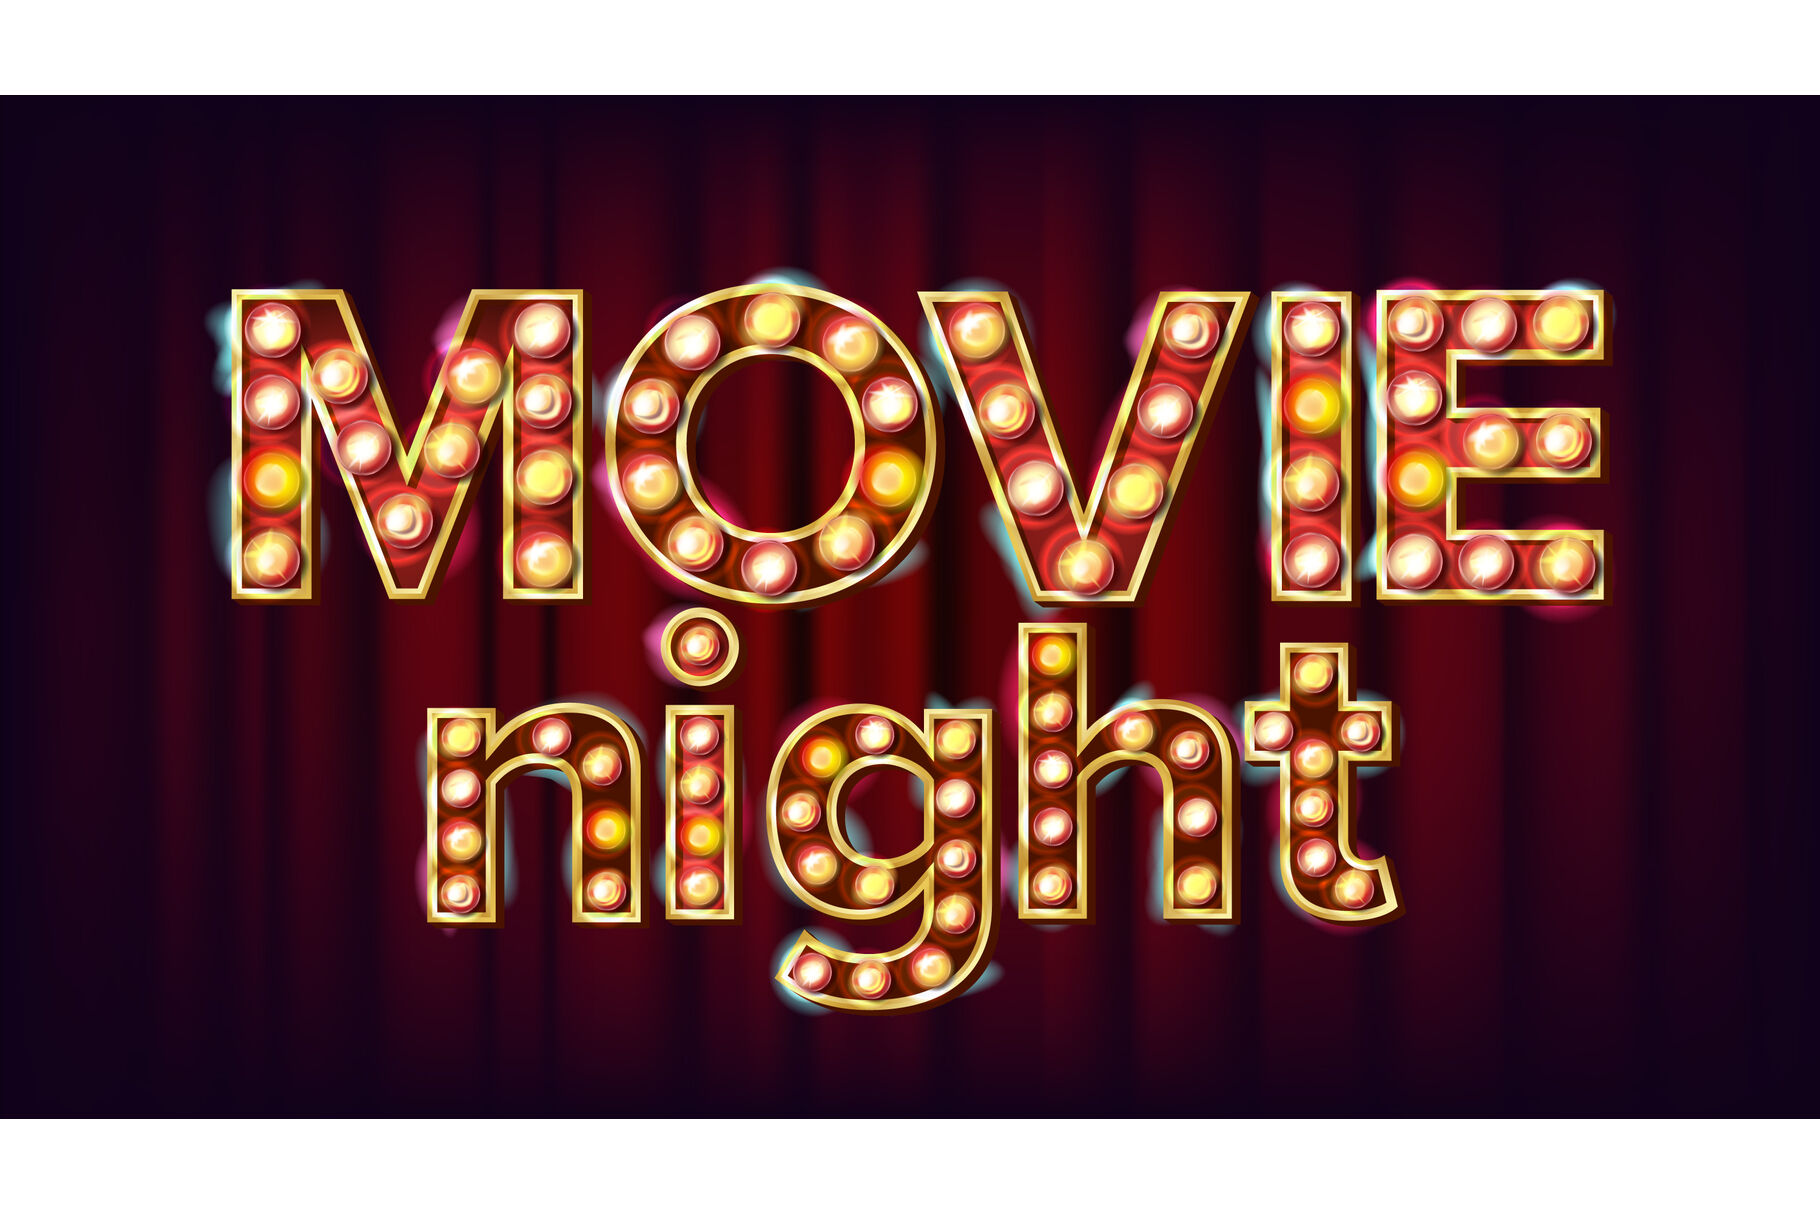 Movie Night Background Vector. Theatre Cinema Golden Illuminated Neon